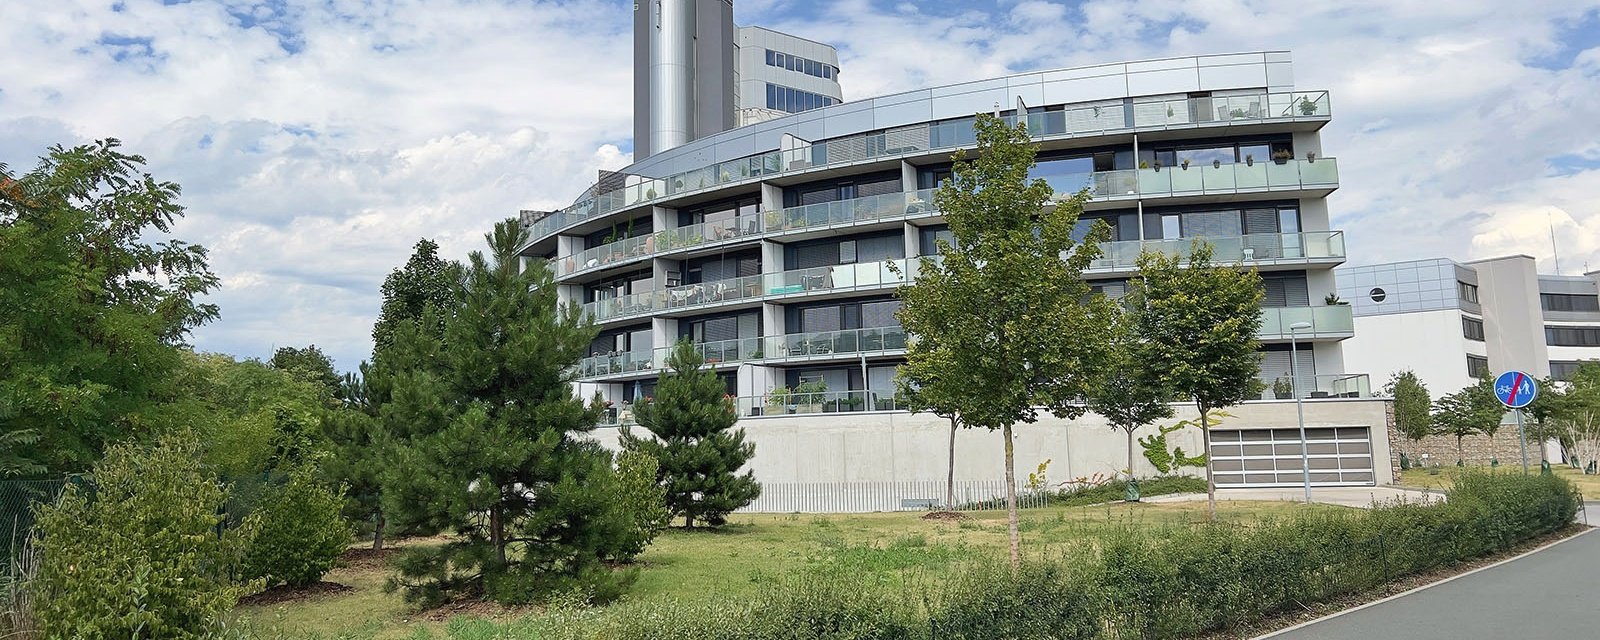 Byt 3+kk s terasou na prodej, 117m² - Brno - Bohunice